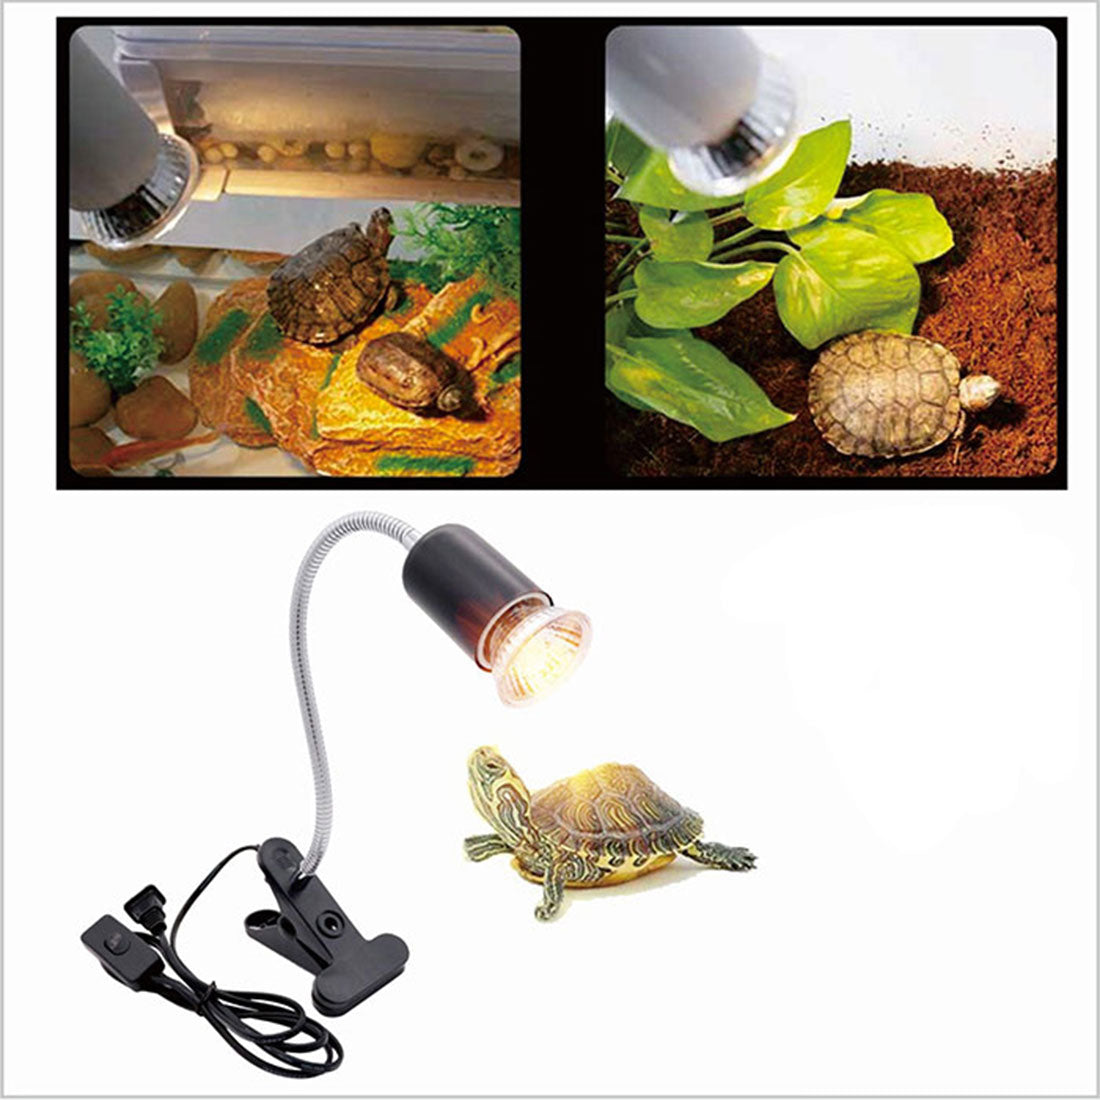 50W Halogen Bulb Included Reptile Heat Lamp